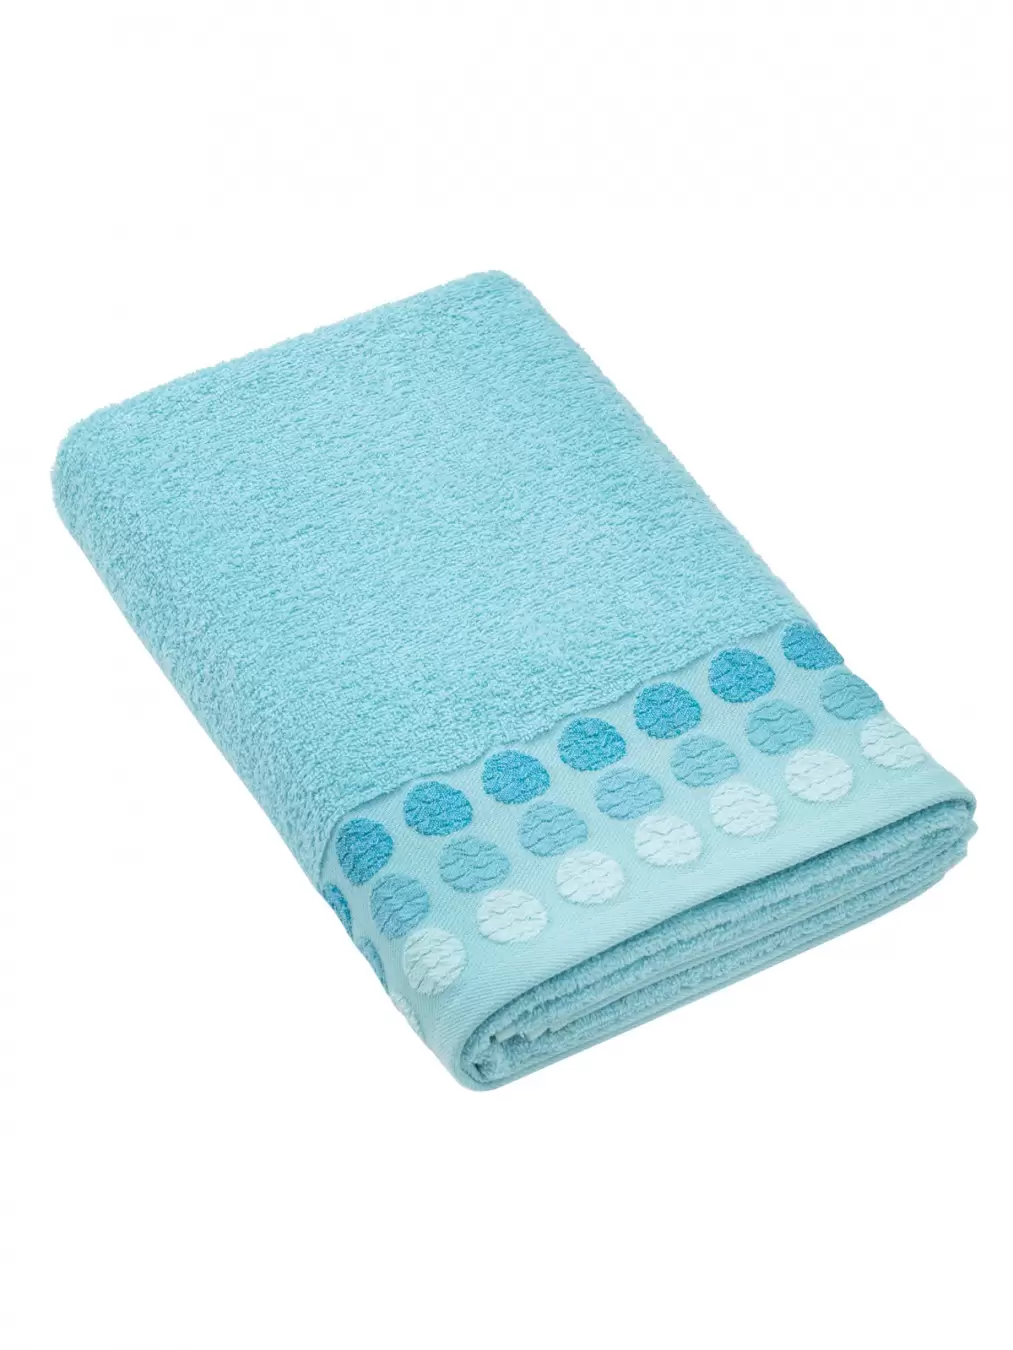 Brielle POINT BLUE, 70x140 полотенце (изображение 1)